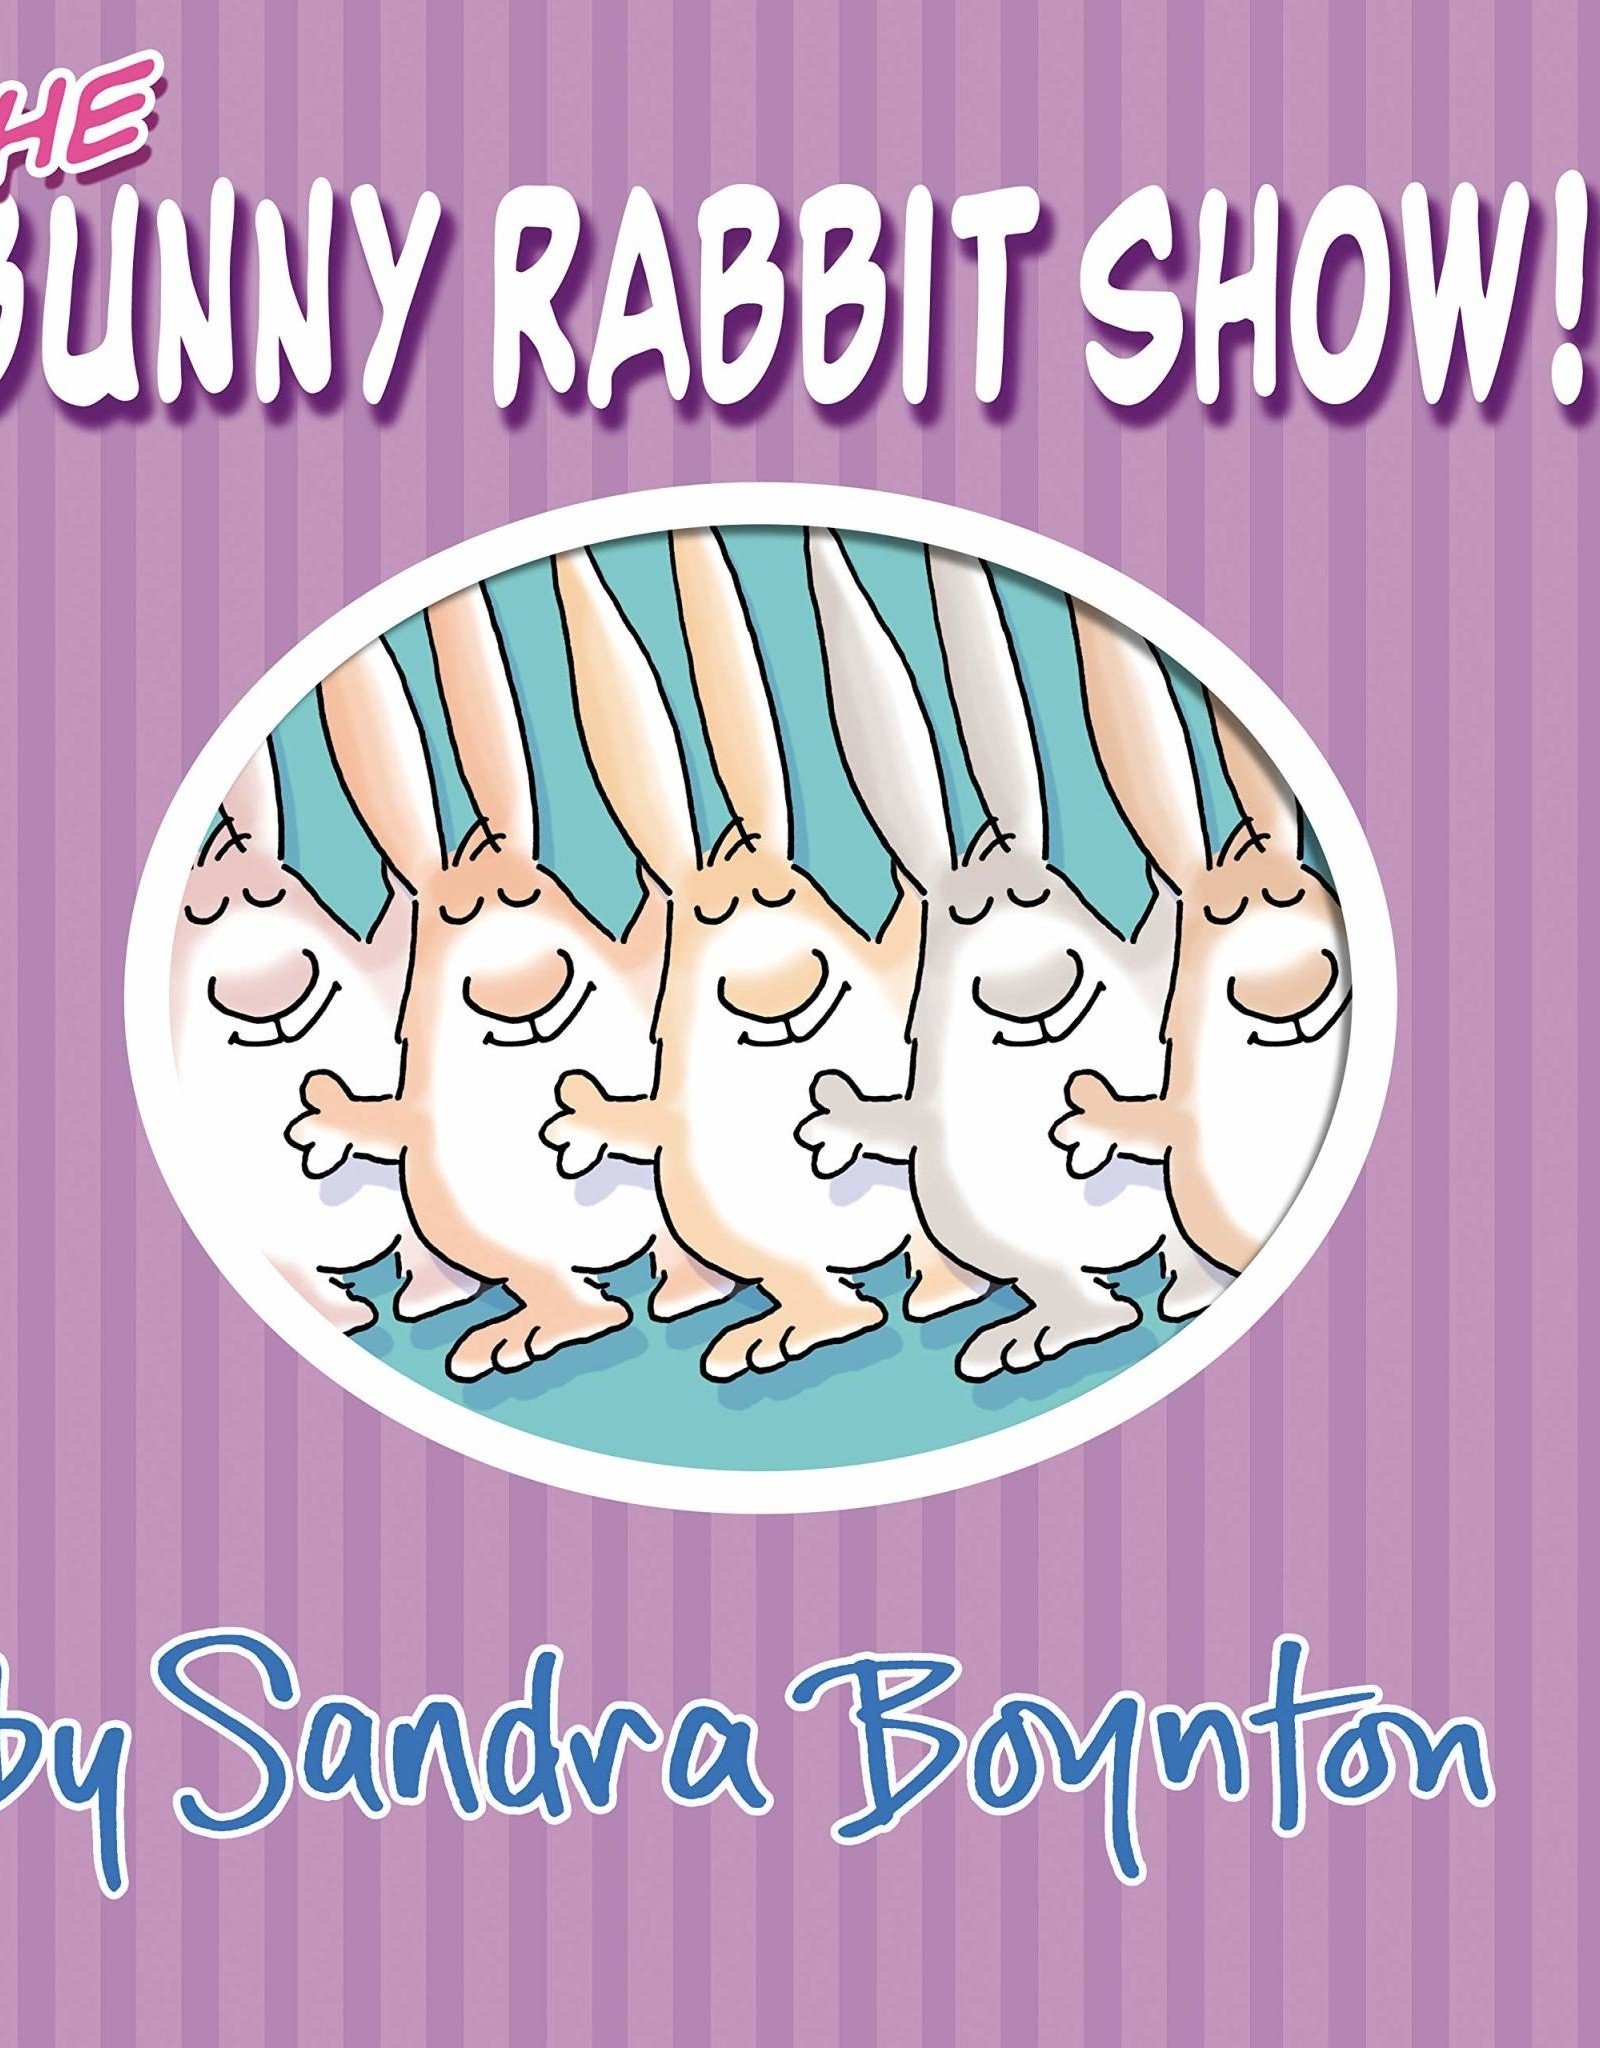 The Bunny Rabbit Show! by Sandra Boynton